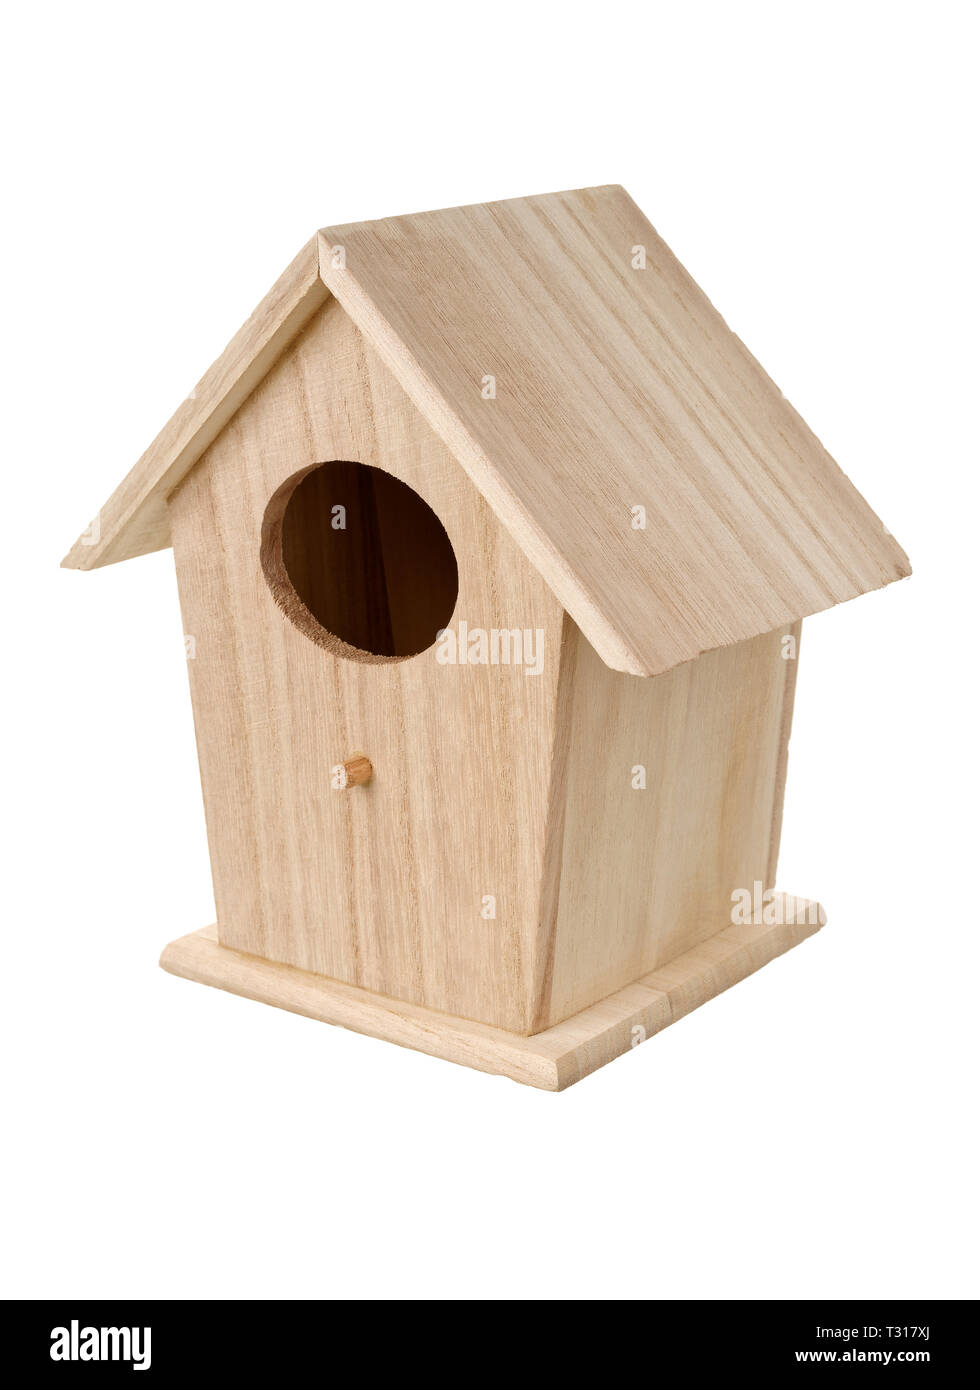 Isolated objects: handmade wooden bird nesting box, bird house, on white background Stock Photo